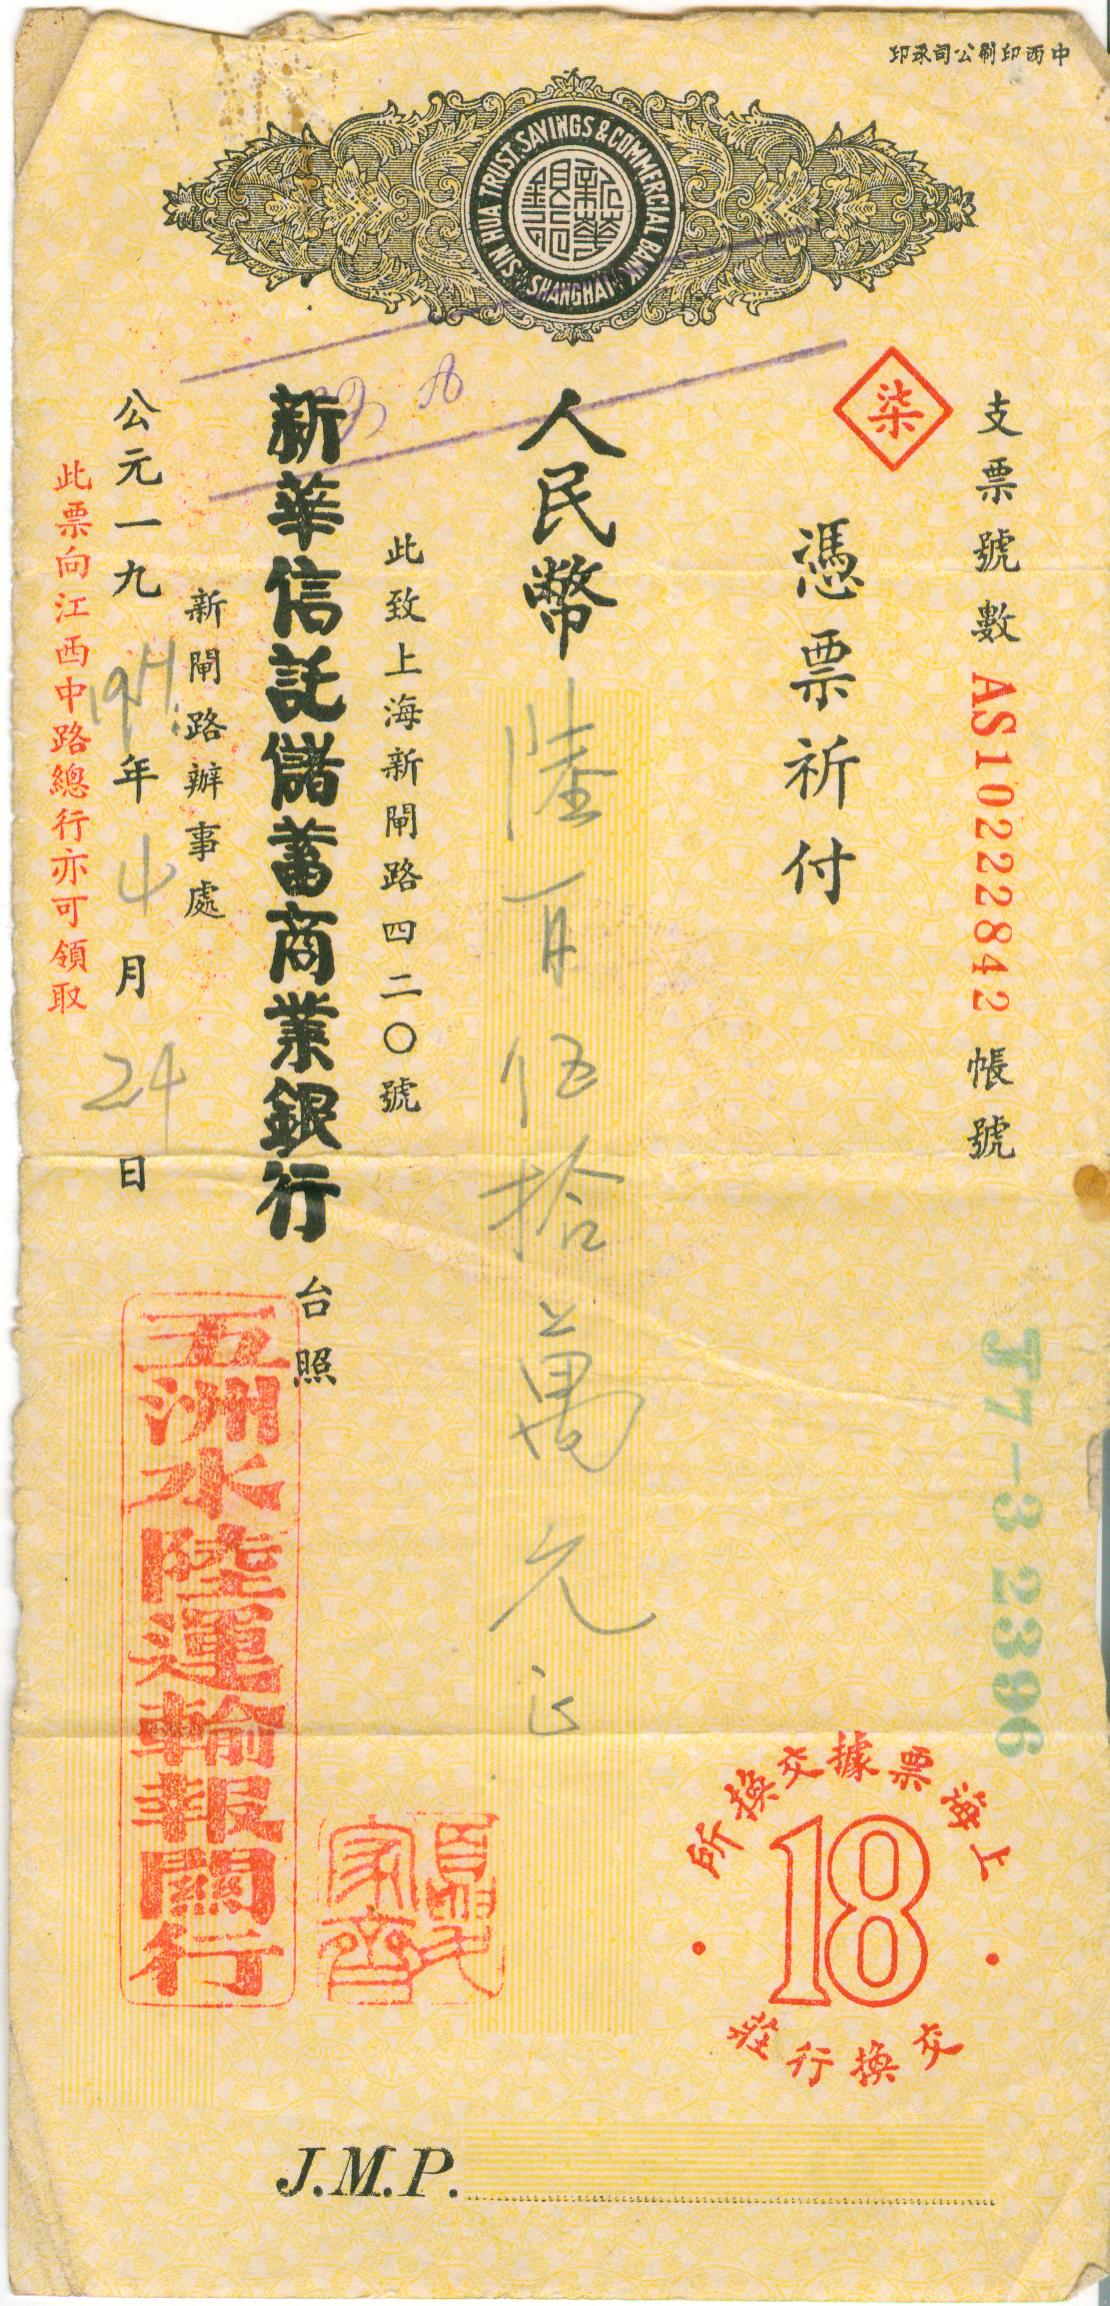 D1700, Check of Sino Trust Saving Bank, China 1951 Cheque